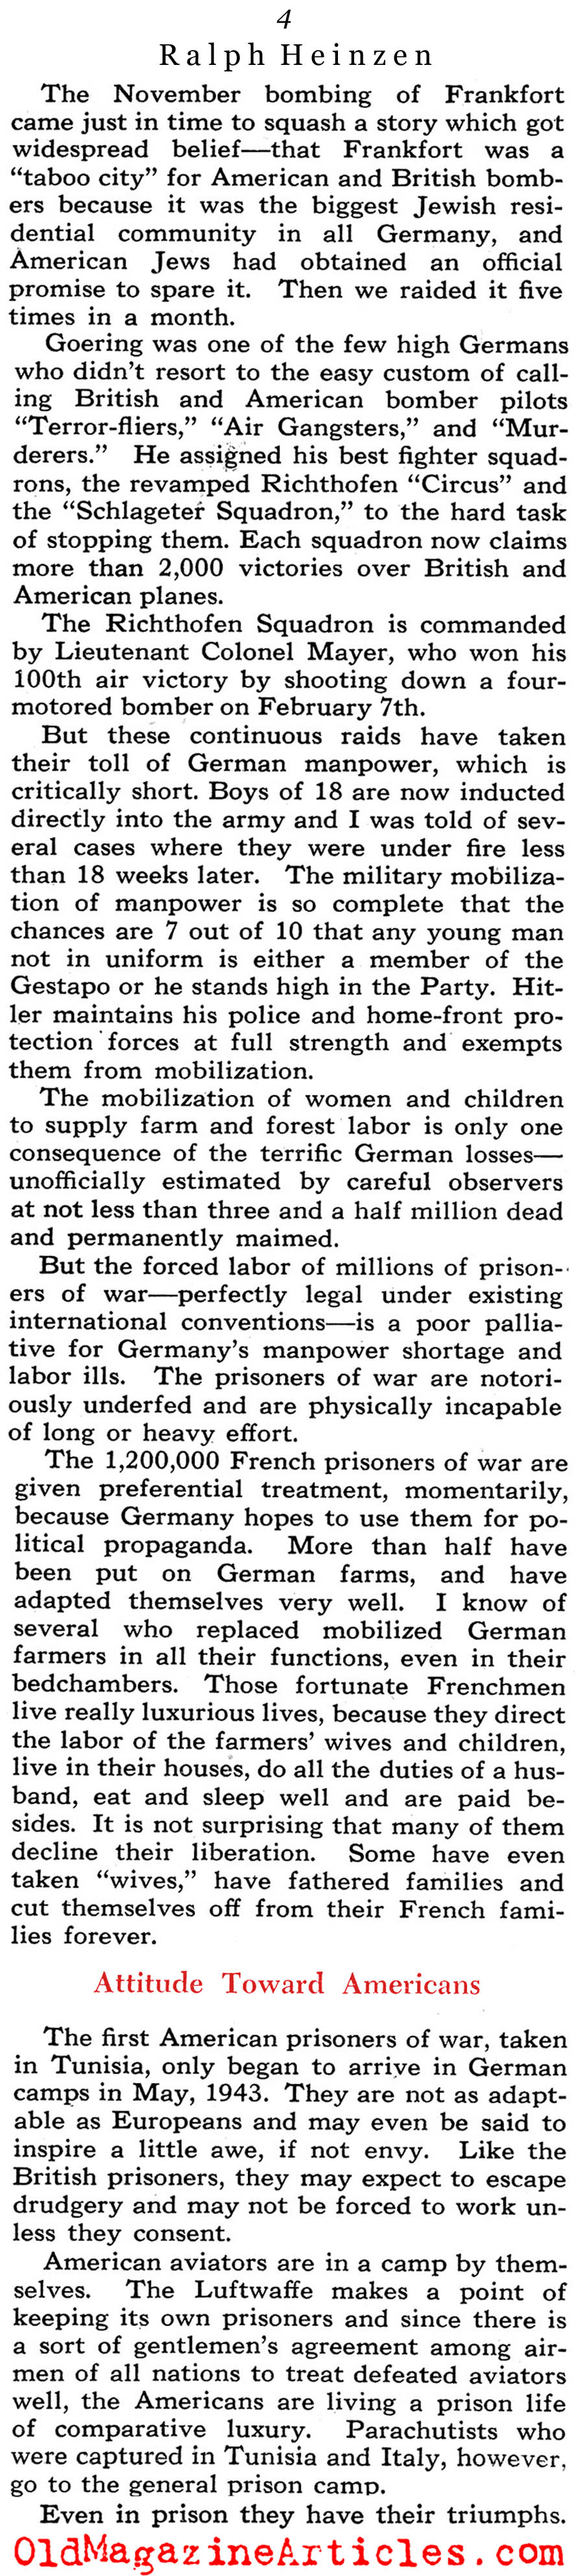 Inside Germany (Collier's Magazine, 1944)